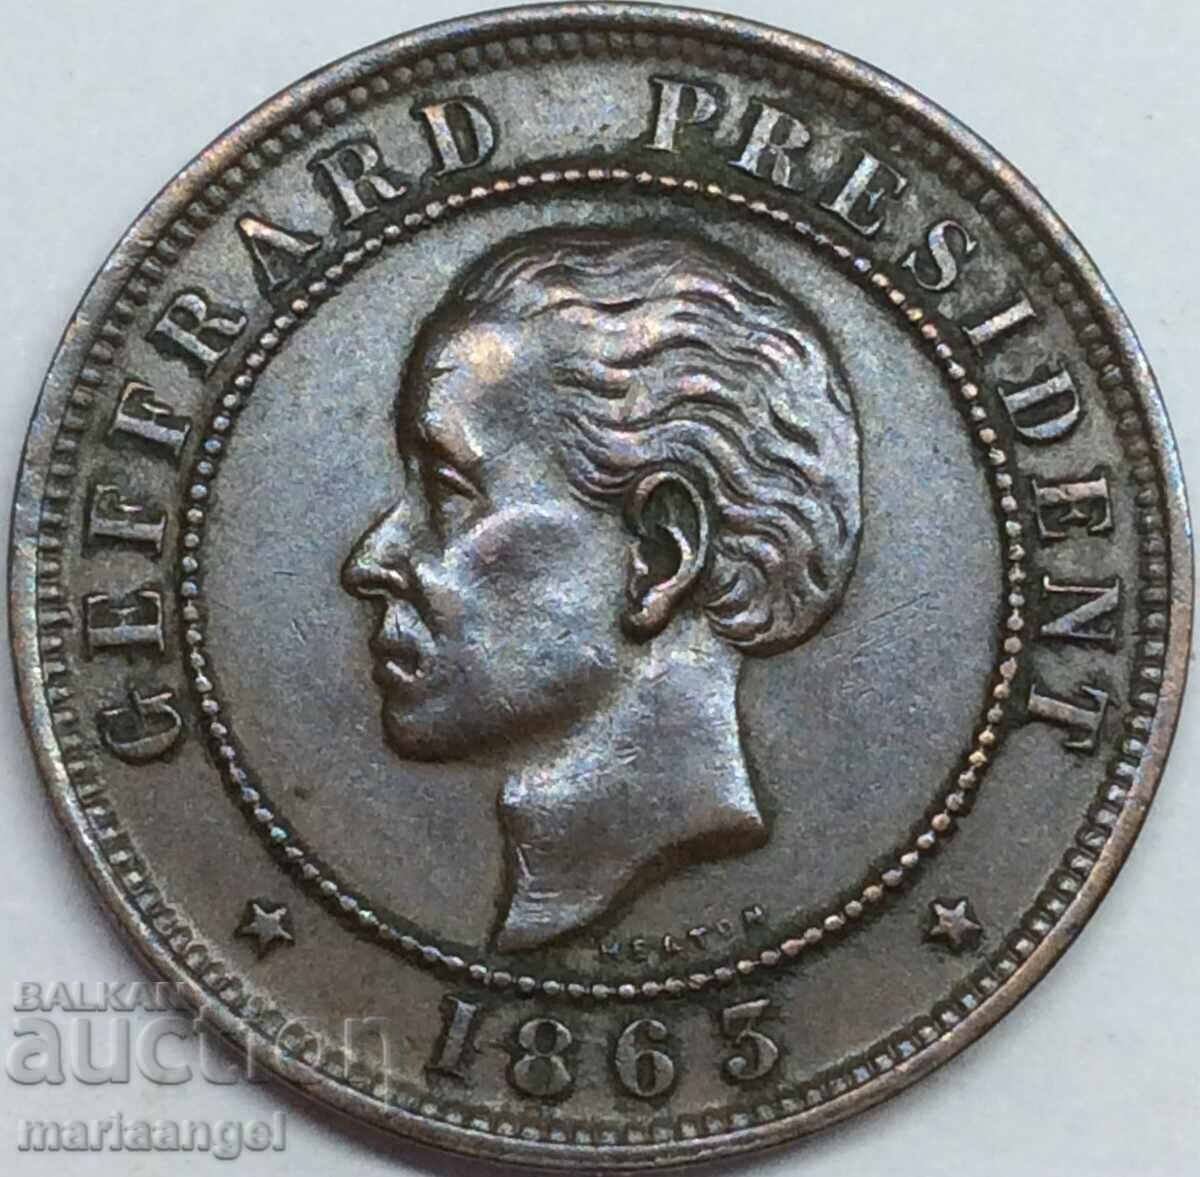 Haiti 1863 20 centimeters President 28mm bronze